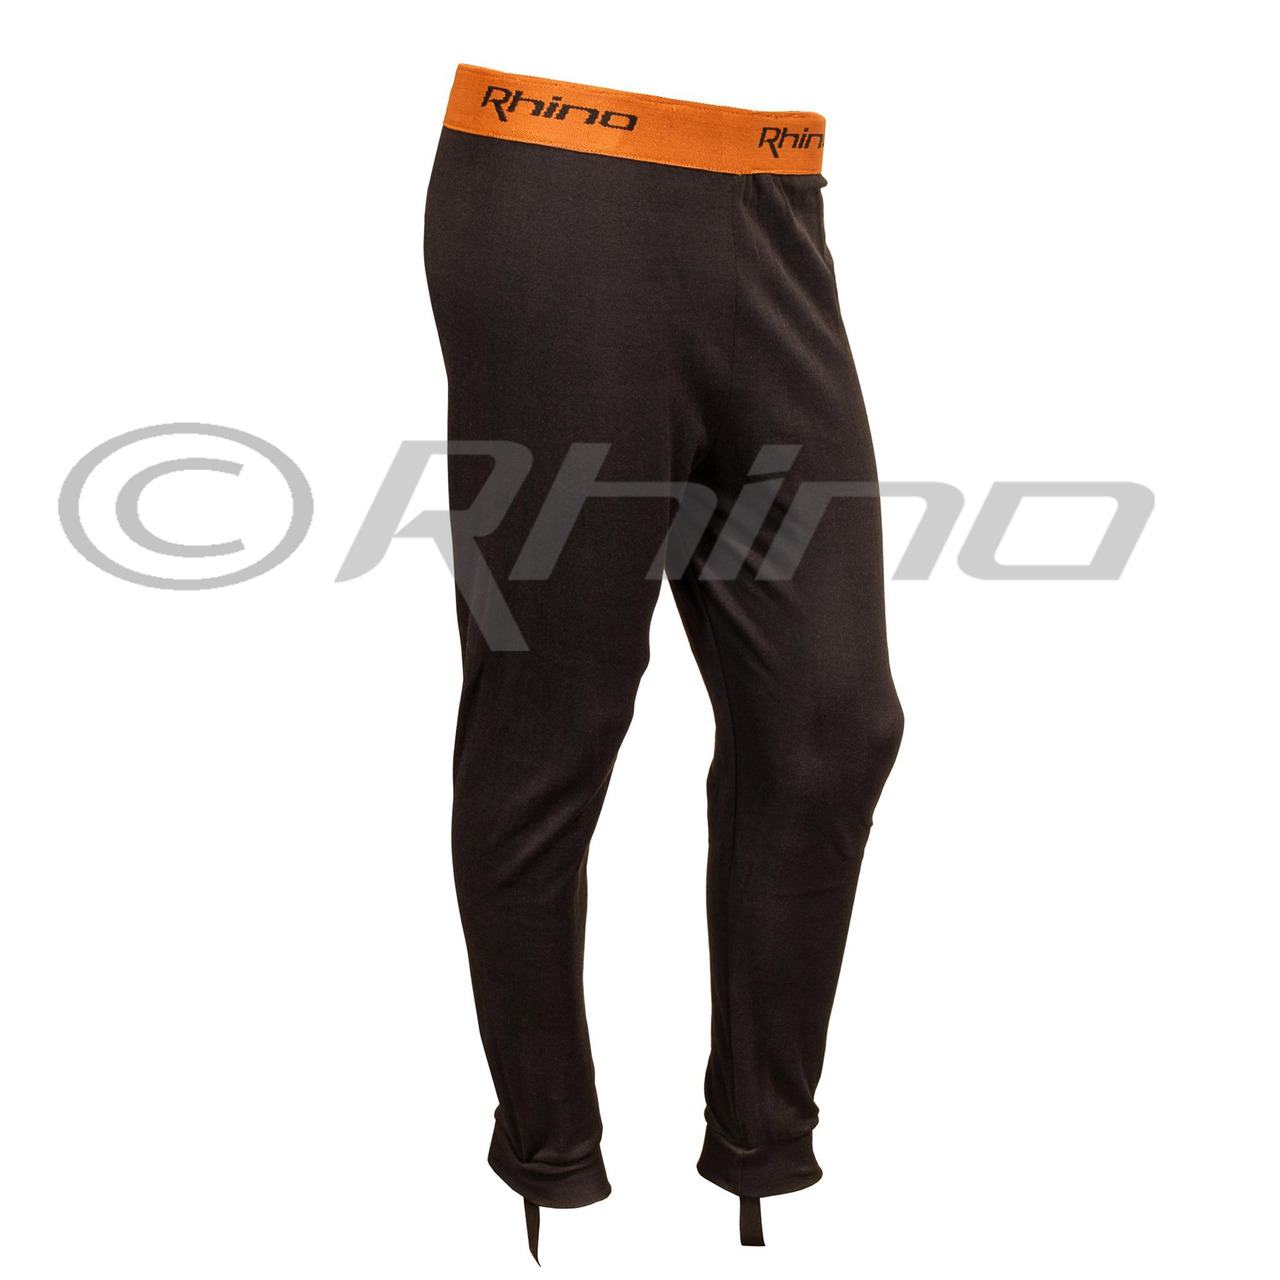 Pants made DuPont ƒ?› Kevlar Motorcycle Leggings for Men made with DuPont ƒ?› Kevlar ?? fiber